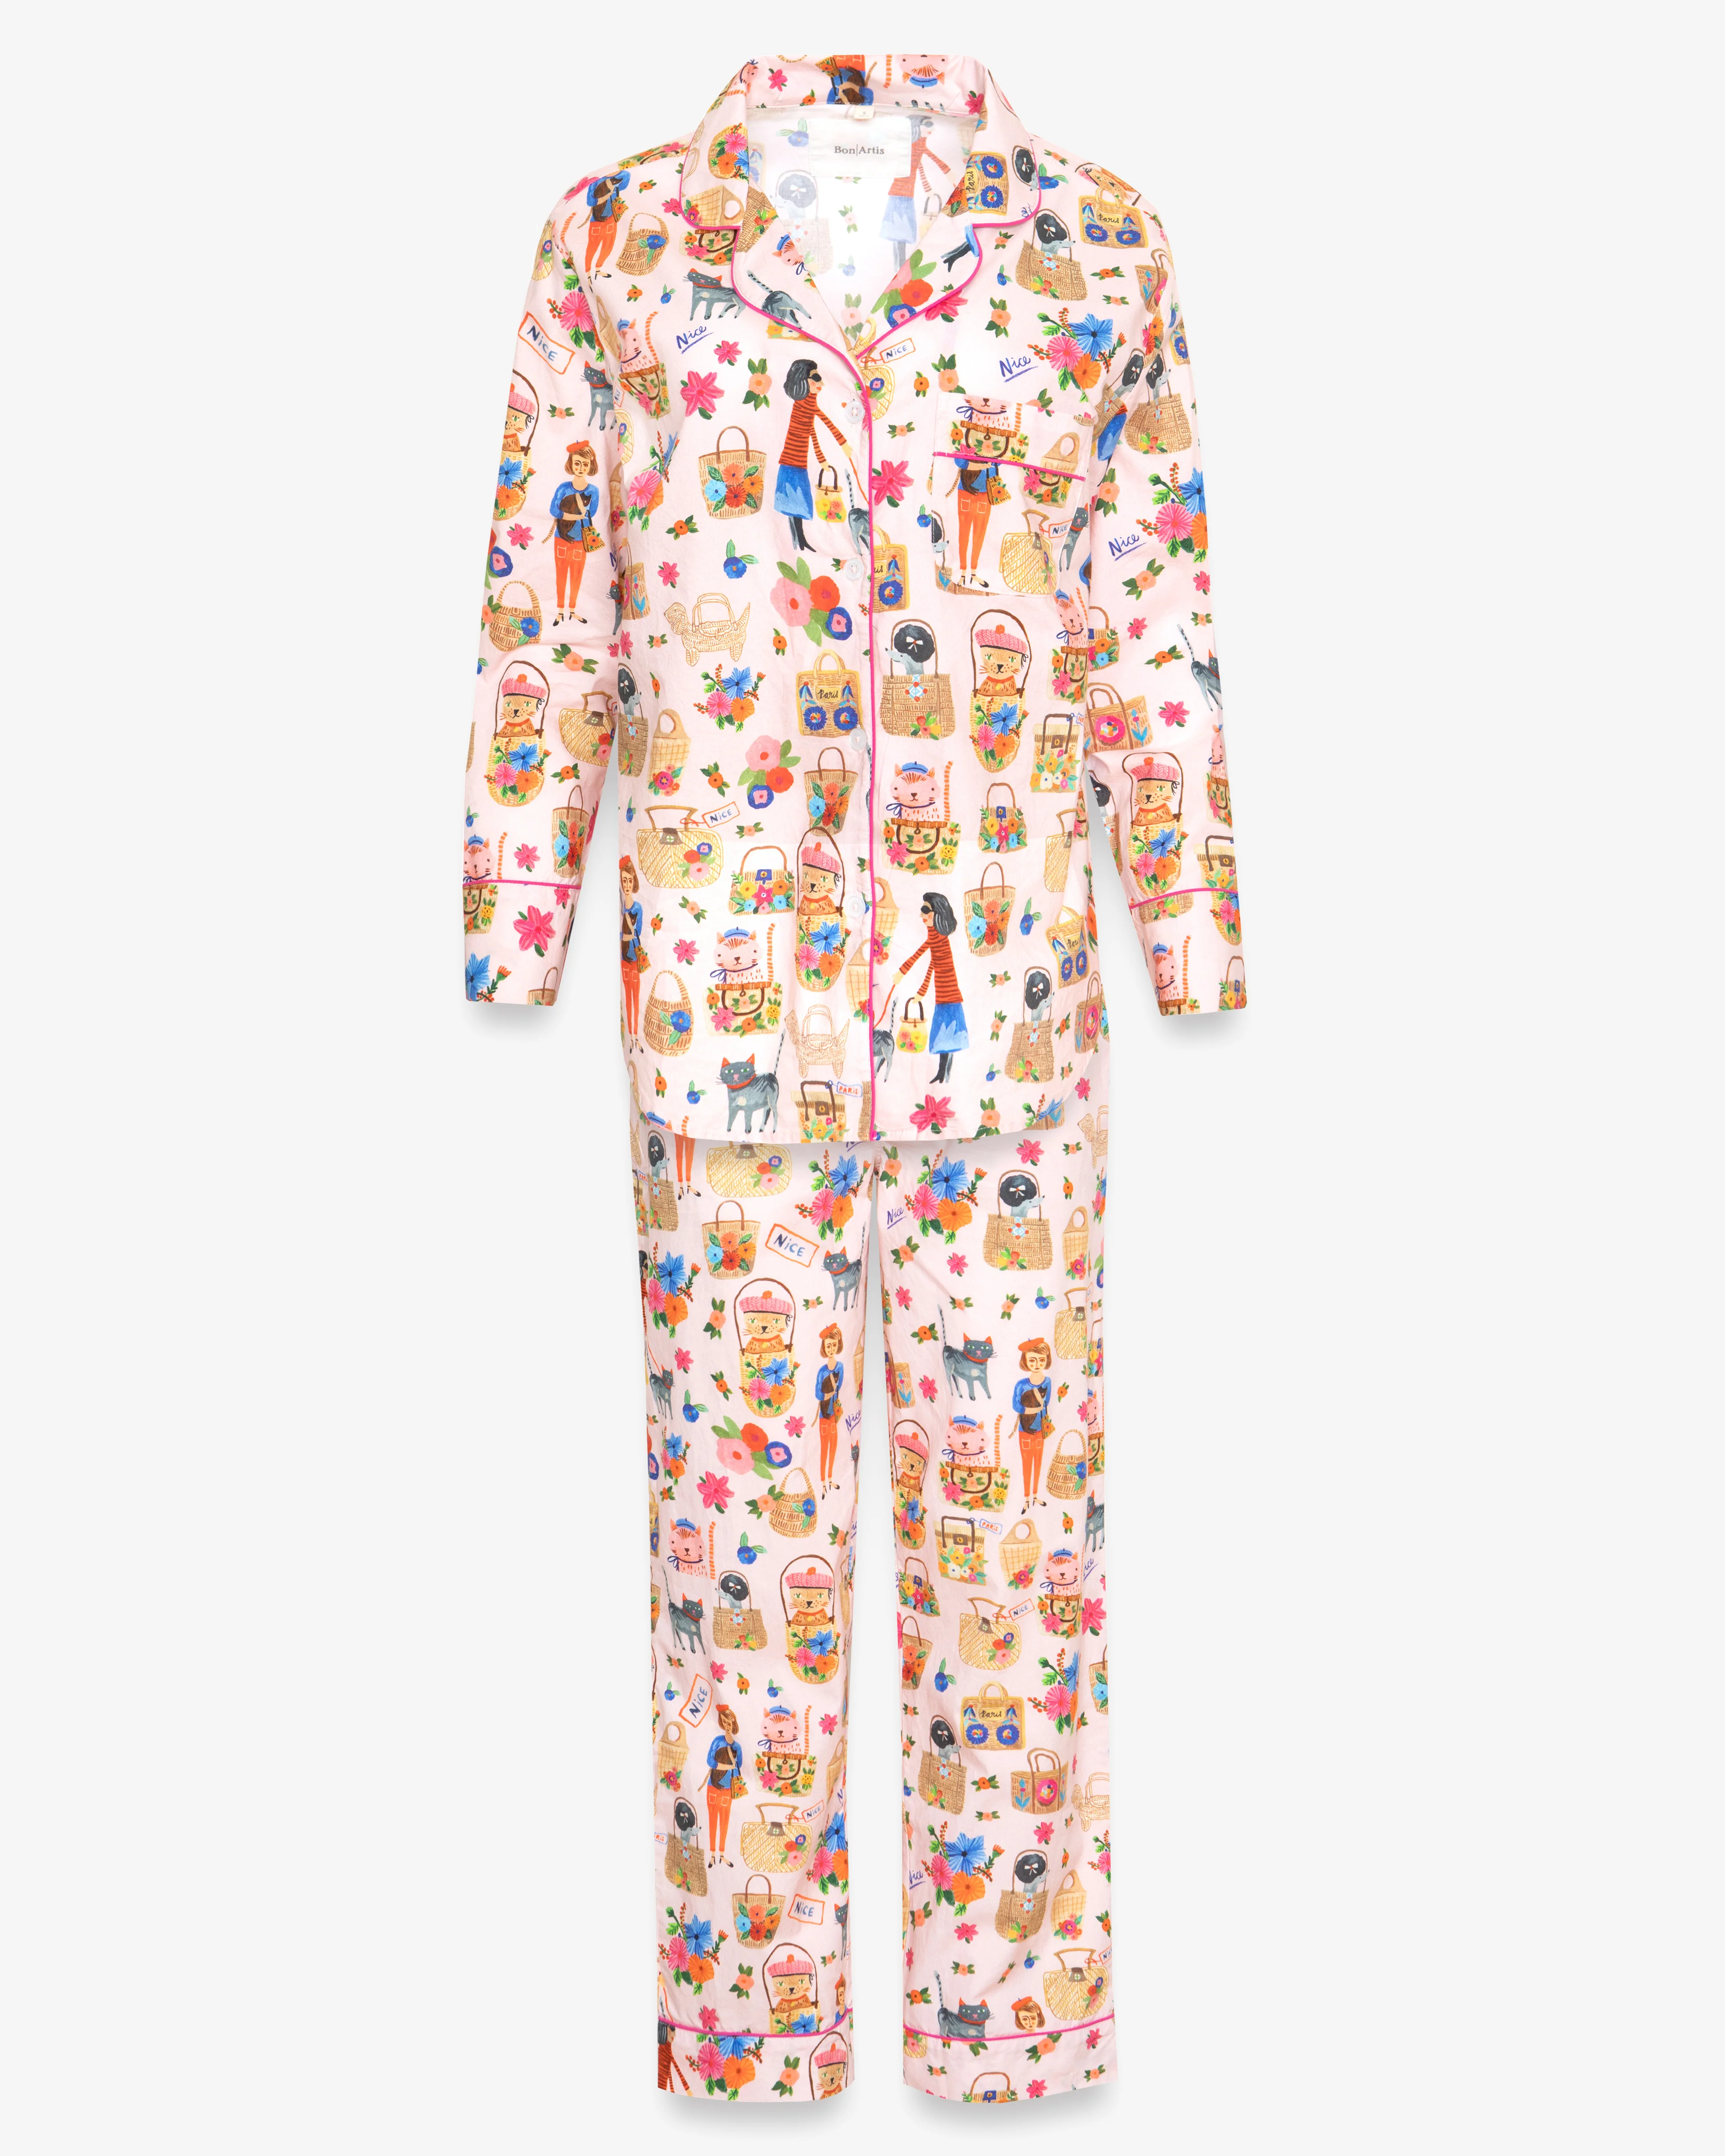 OohLaLa Cats Pyjama Set - country clothesline